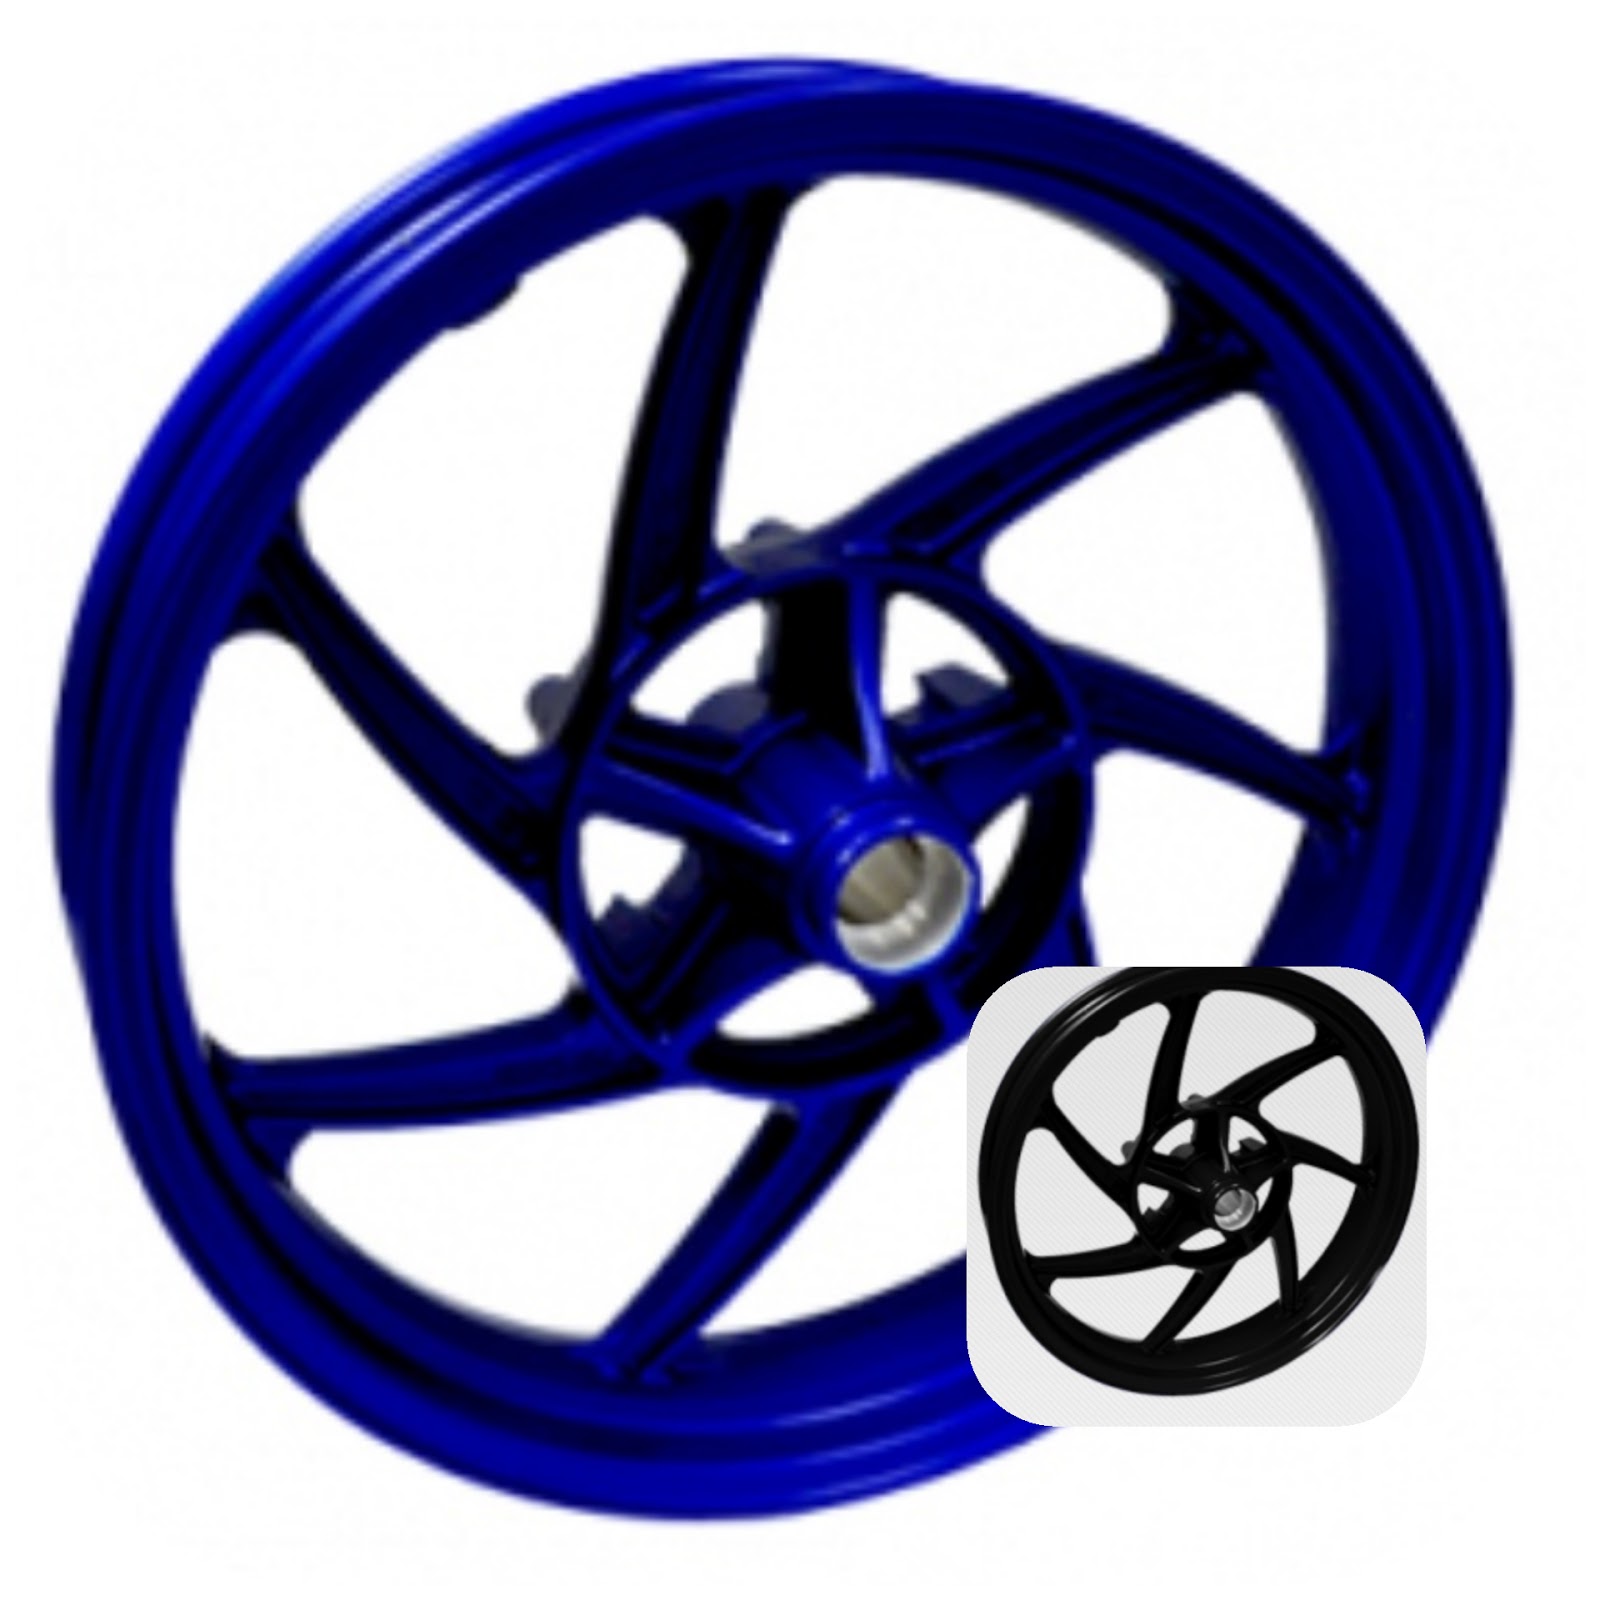 Motor Rismo диски r17. Cast wheels отзывы